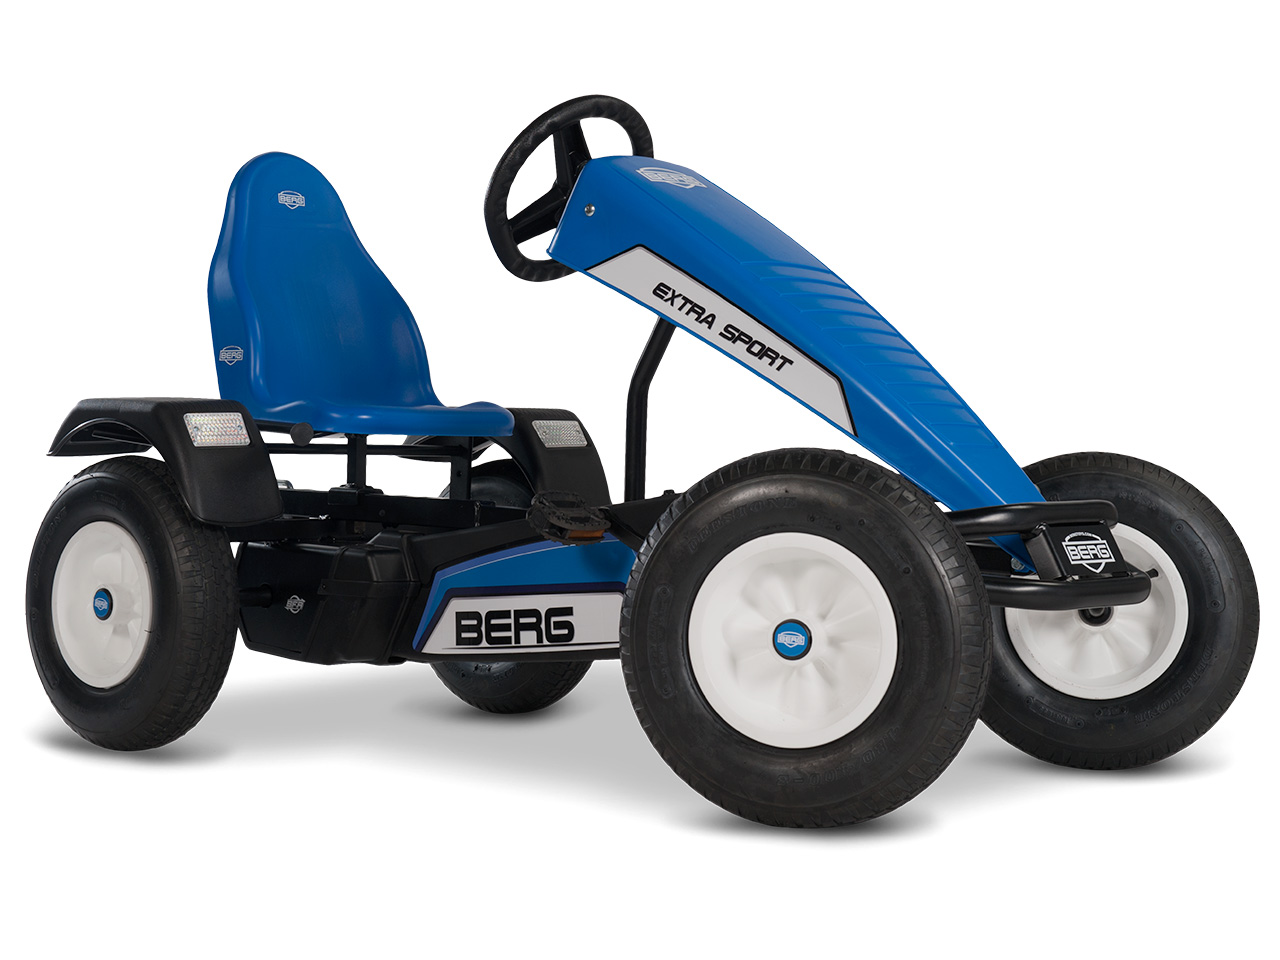 https://www.spielheld.de/out/pictures/master/product/1/spielheld-berg-pedal-gokart-extra-sport-blue-e-bfr-elektro.jpg